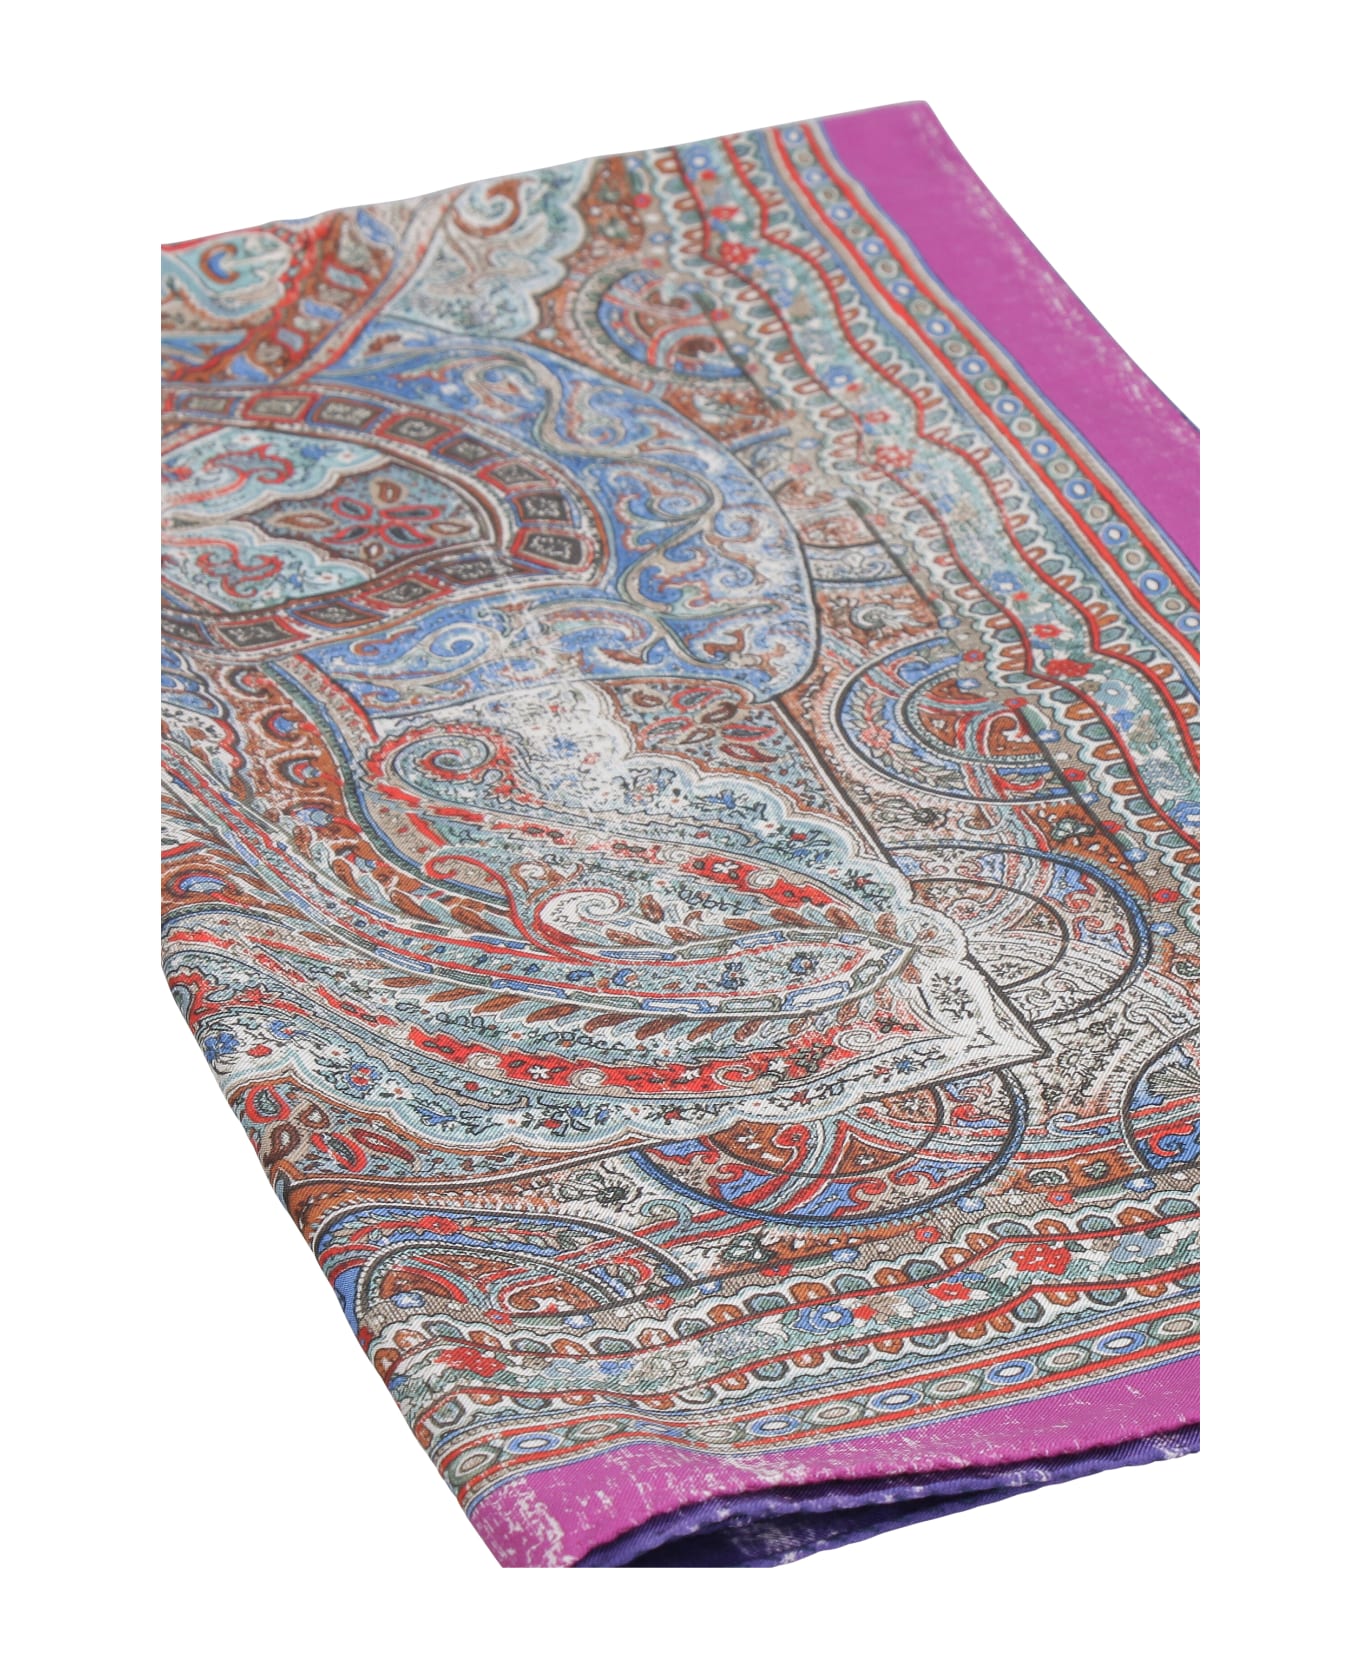 Faliero Sarti Nuria Printed Silk Scarf - Multicolor